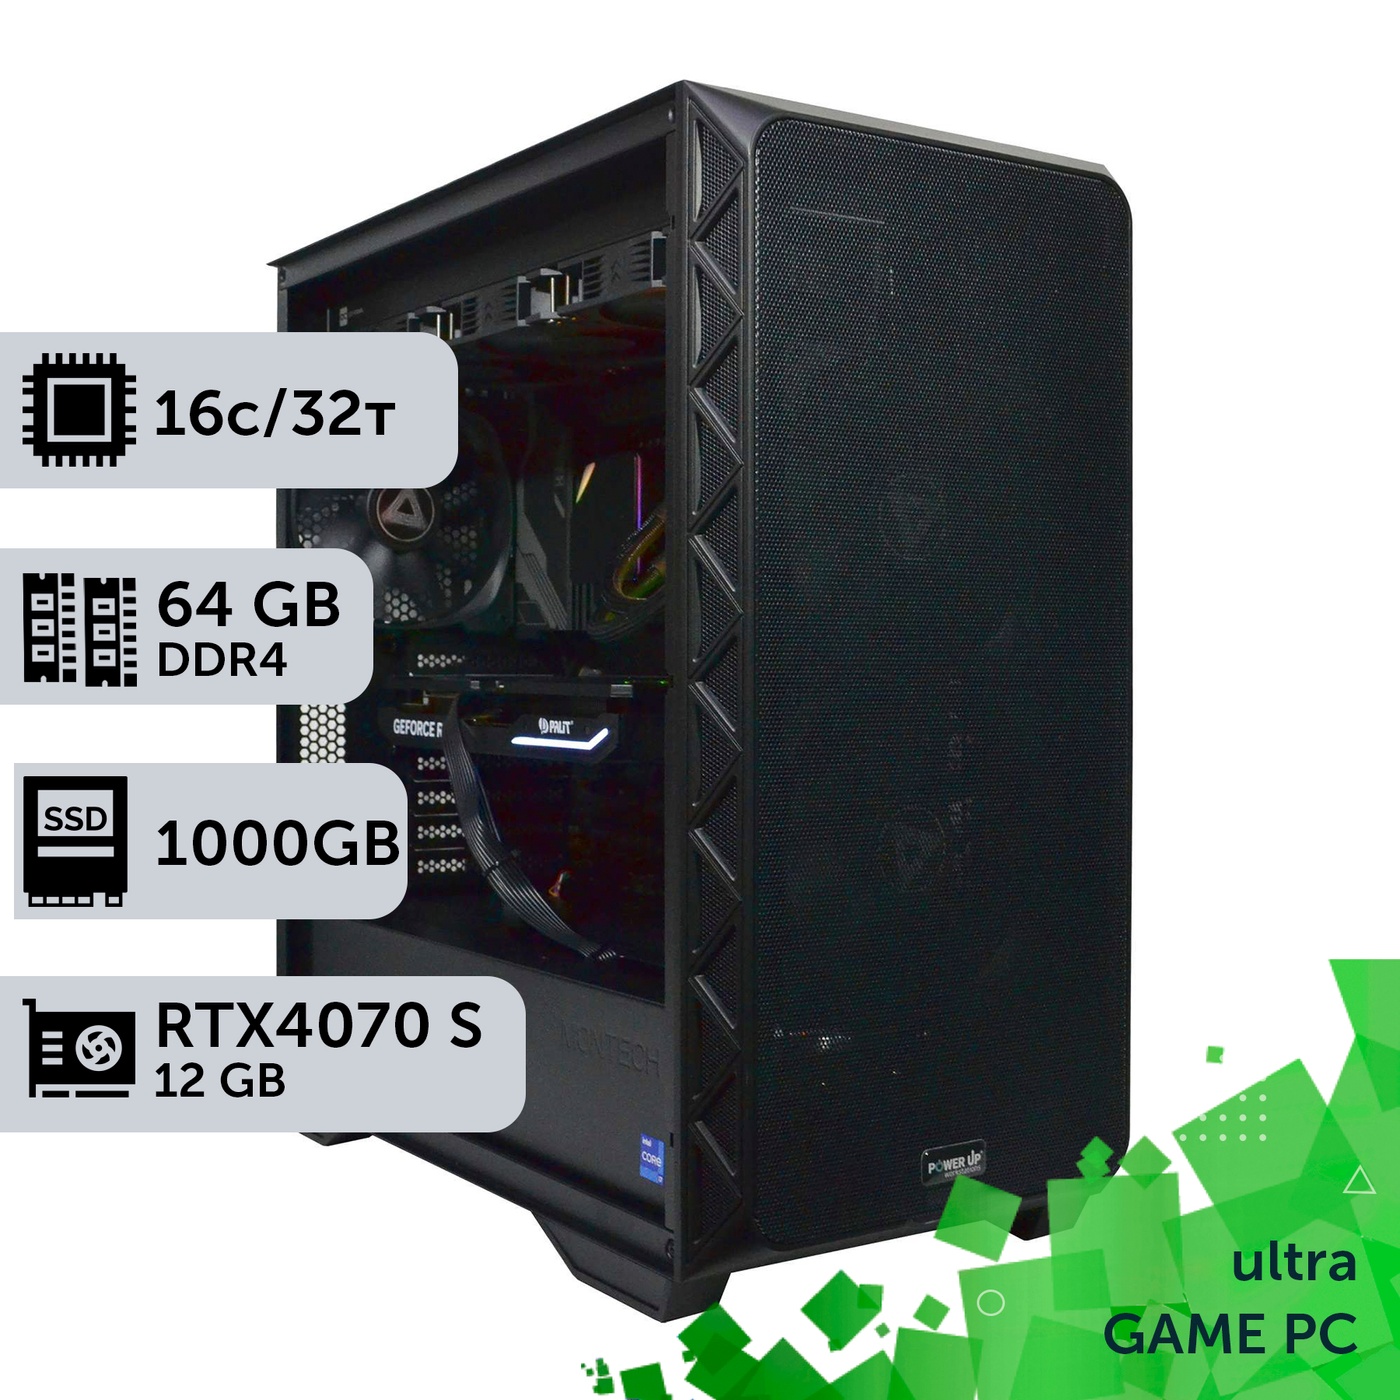 Игровой компьютер GamePC Ultra #371 Ryzen 9 5950x/64 GB/SSD 1TB/GeForce RTX 4070 Super 12GB